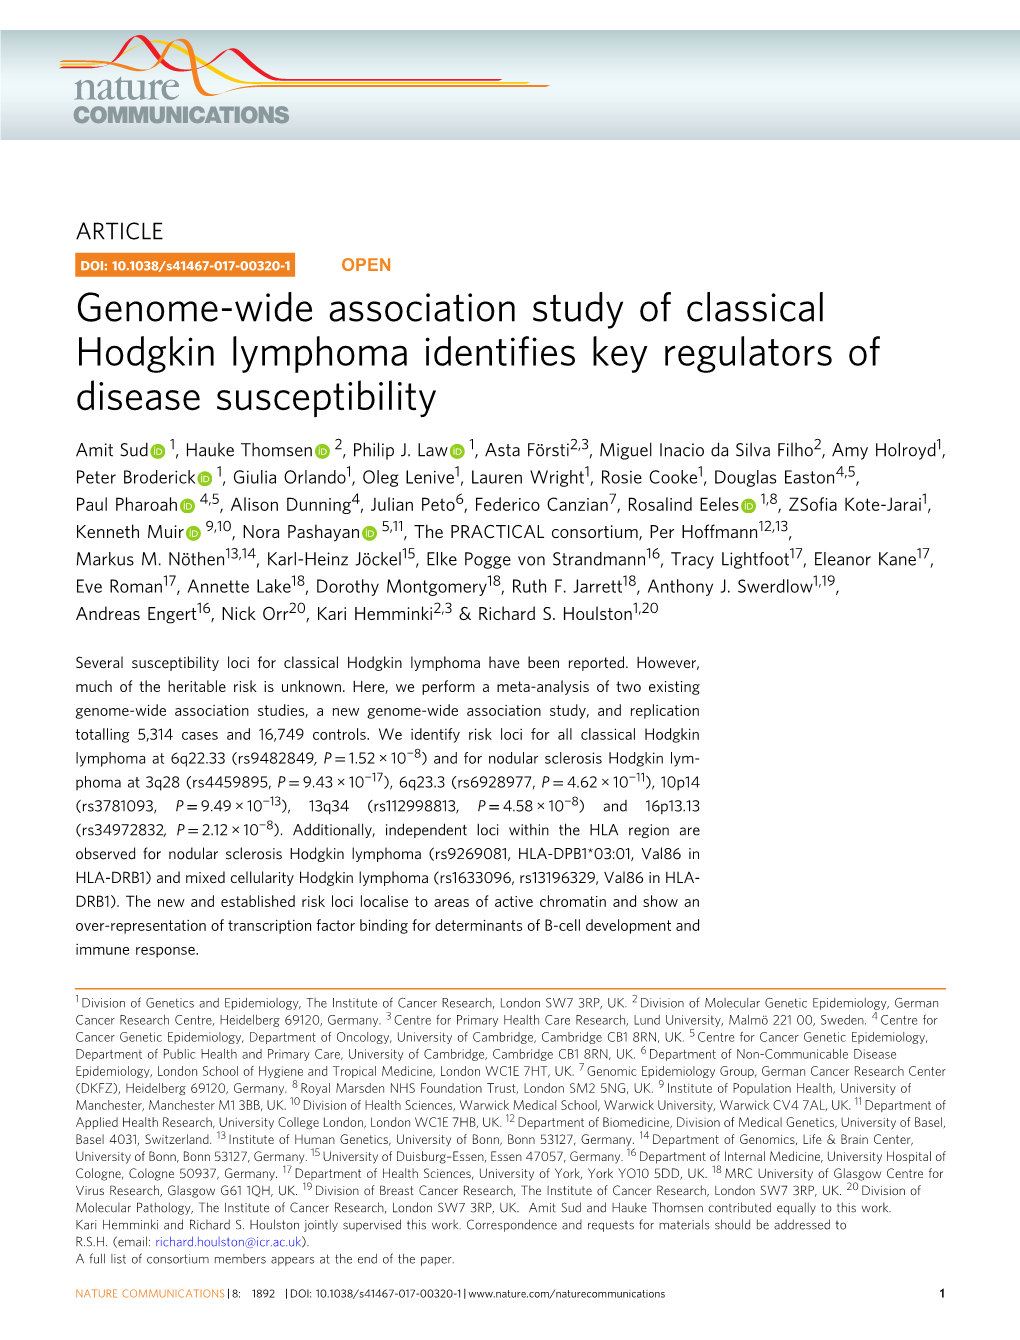 Genome-Wide Association Study of Classical Hodgkin Lymphoma Identiﬁes Key Regulators of Disease Susceptibility